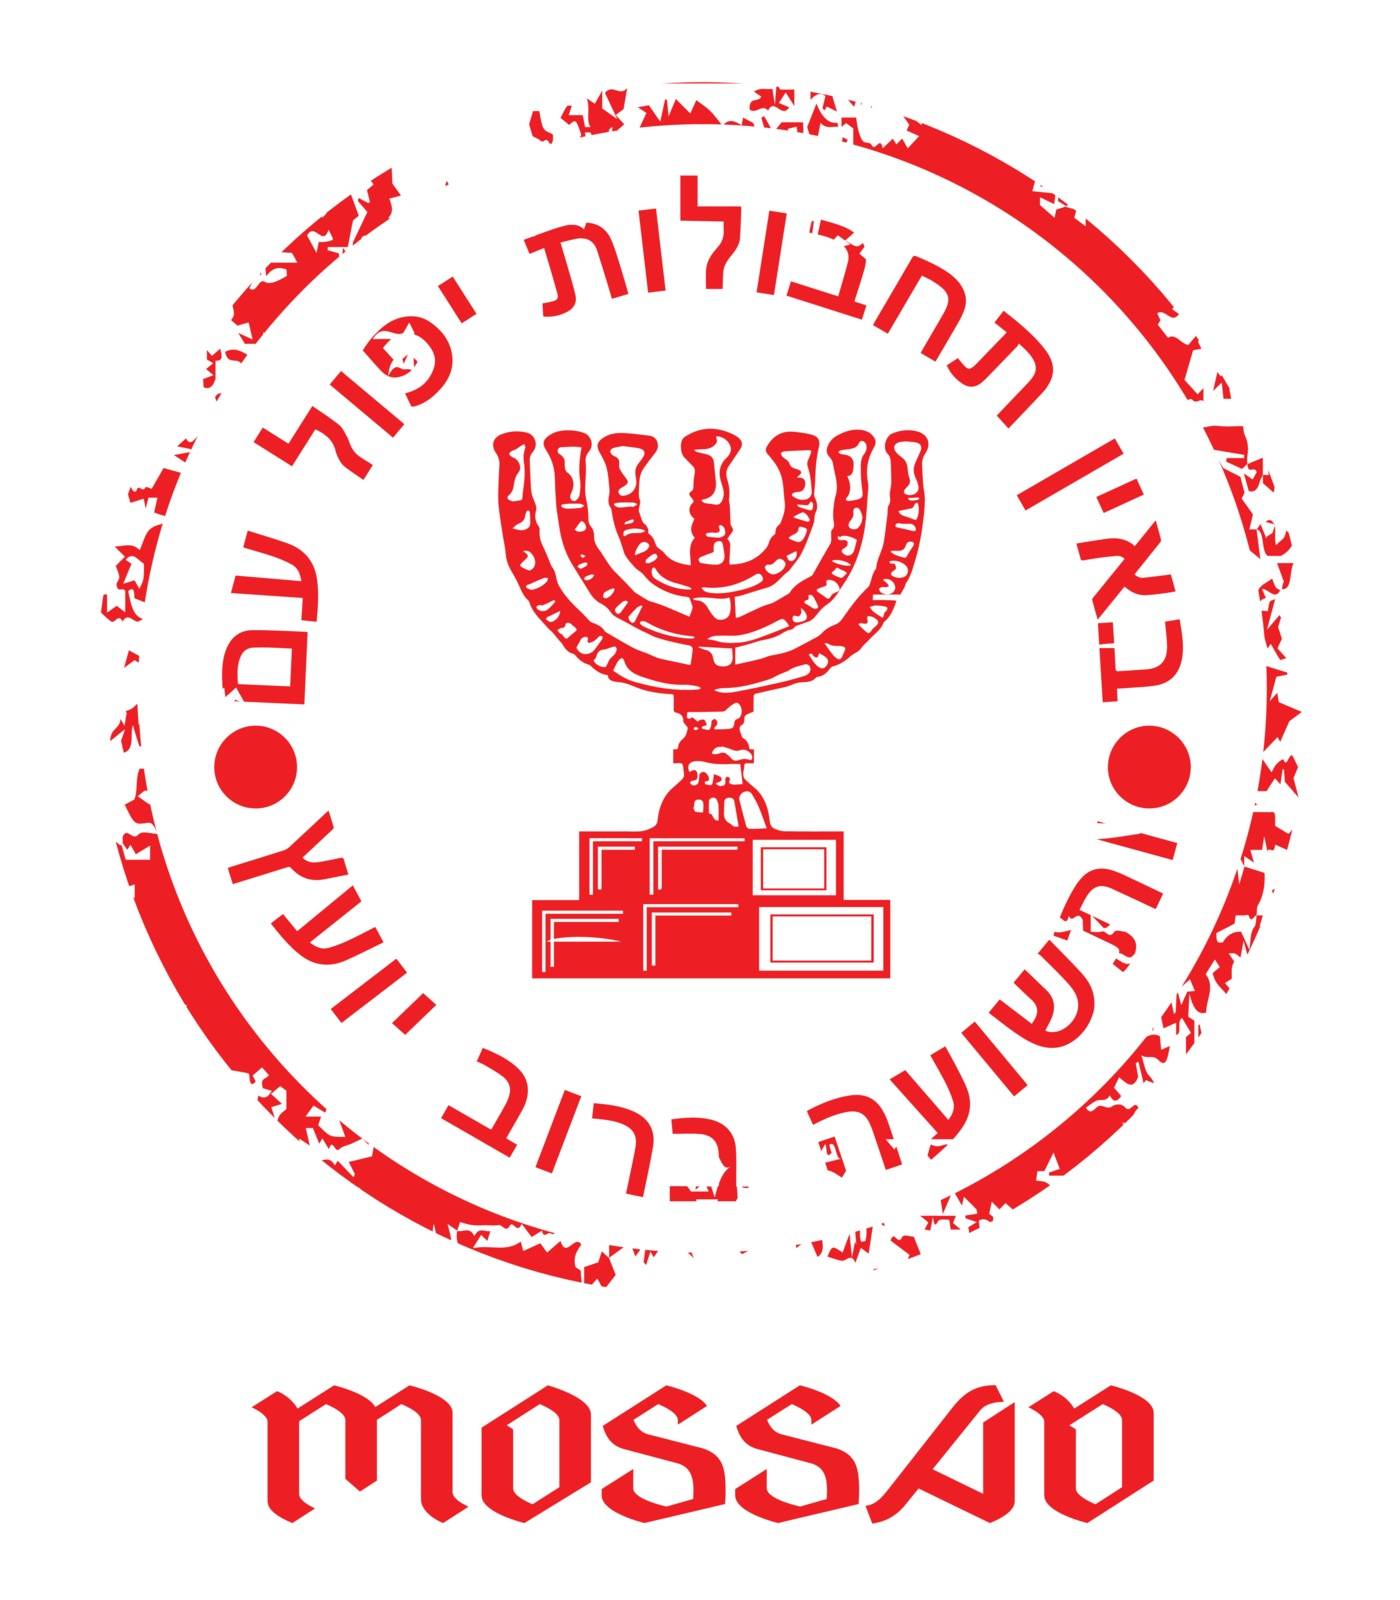 Mossad Insignia by Bigalbaloo